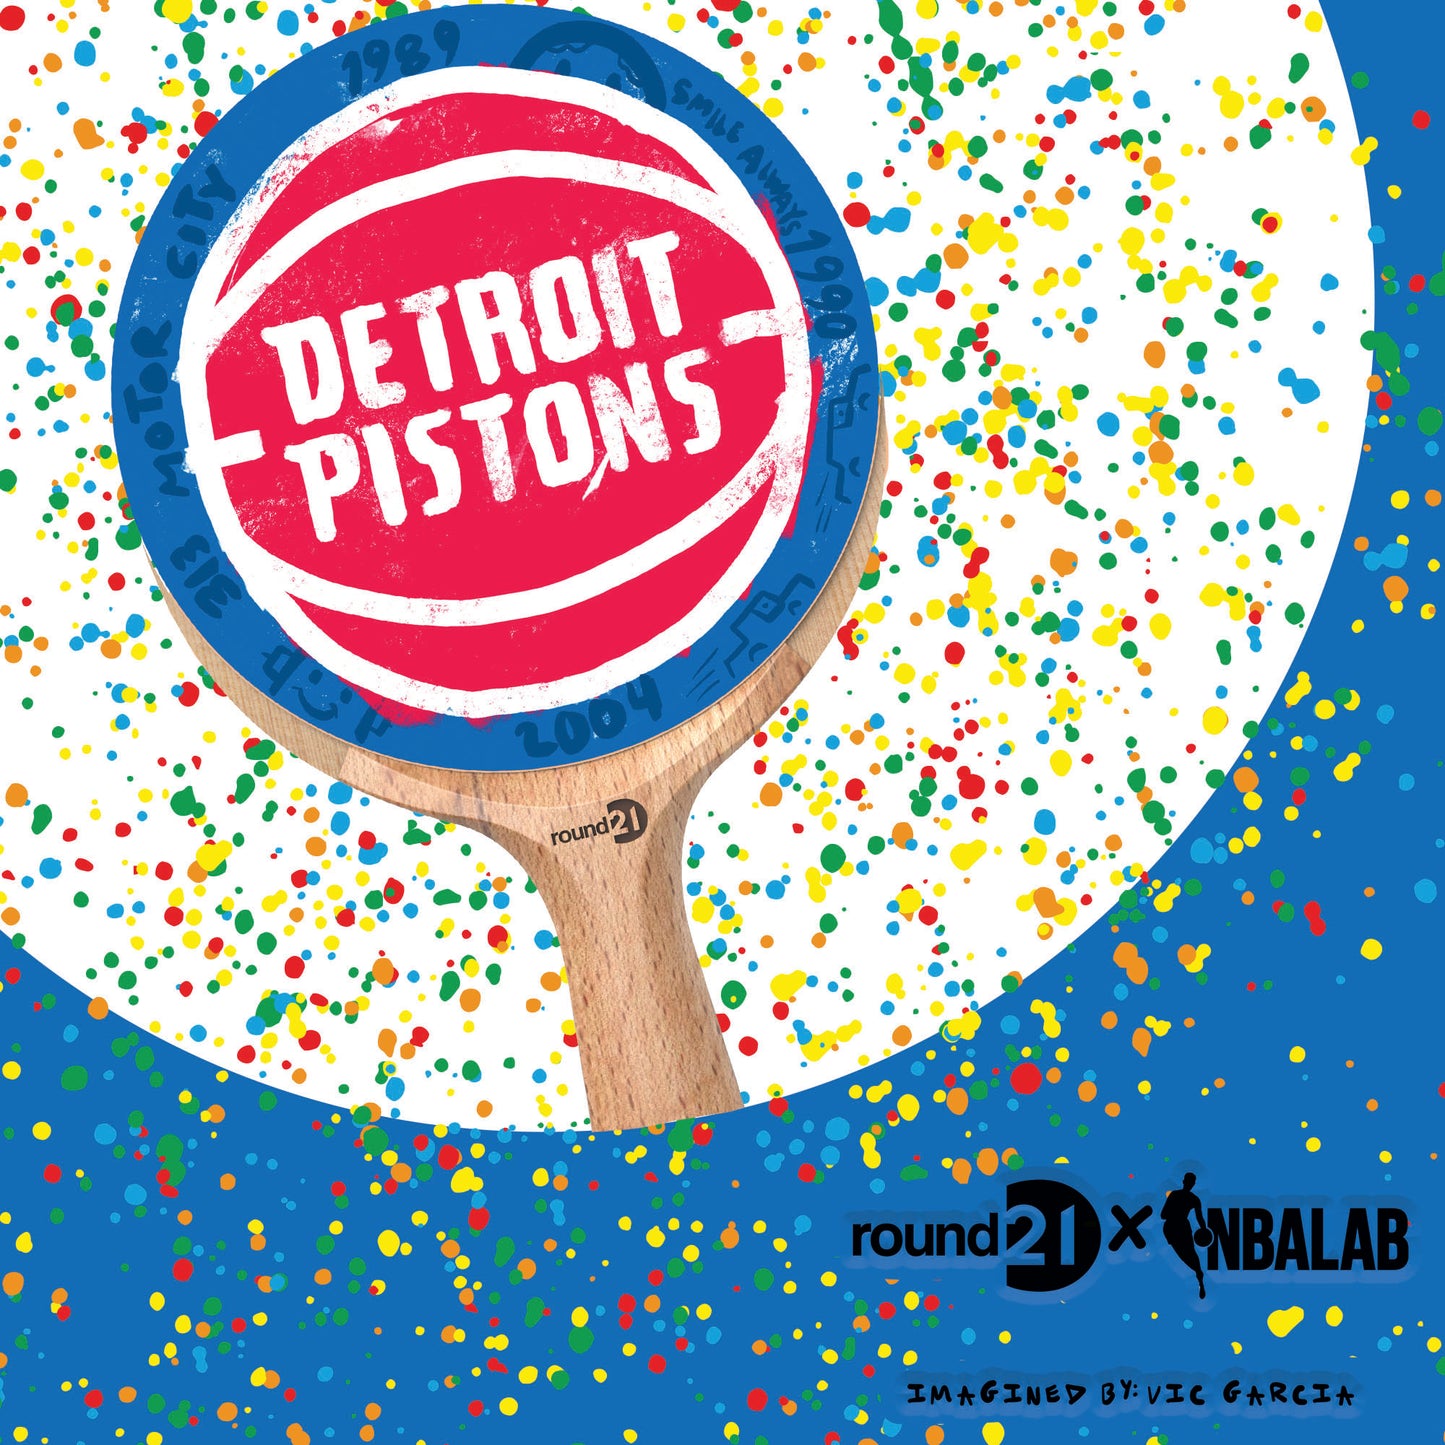 Detroit Pistons paddle